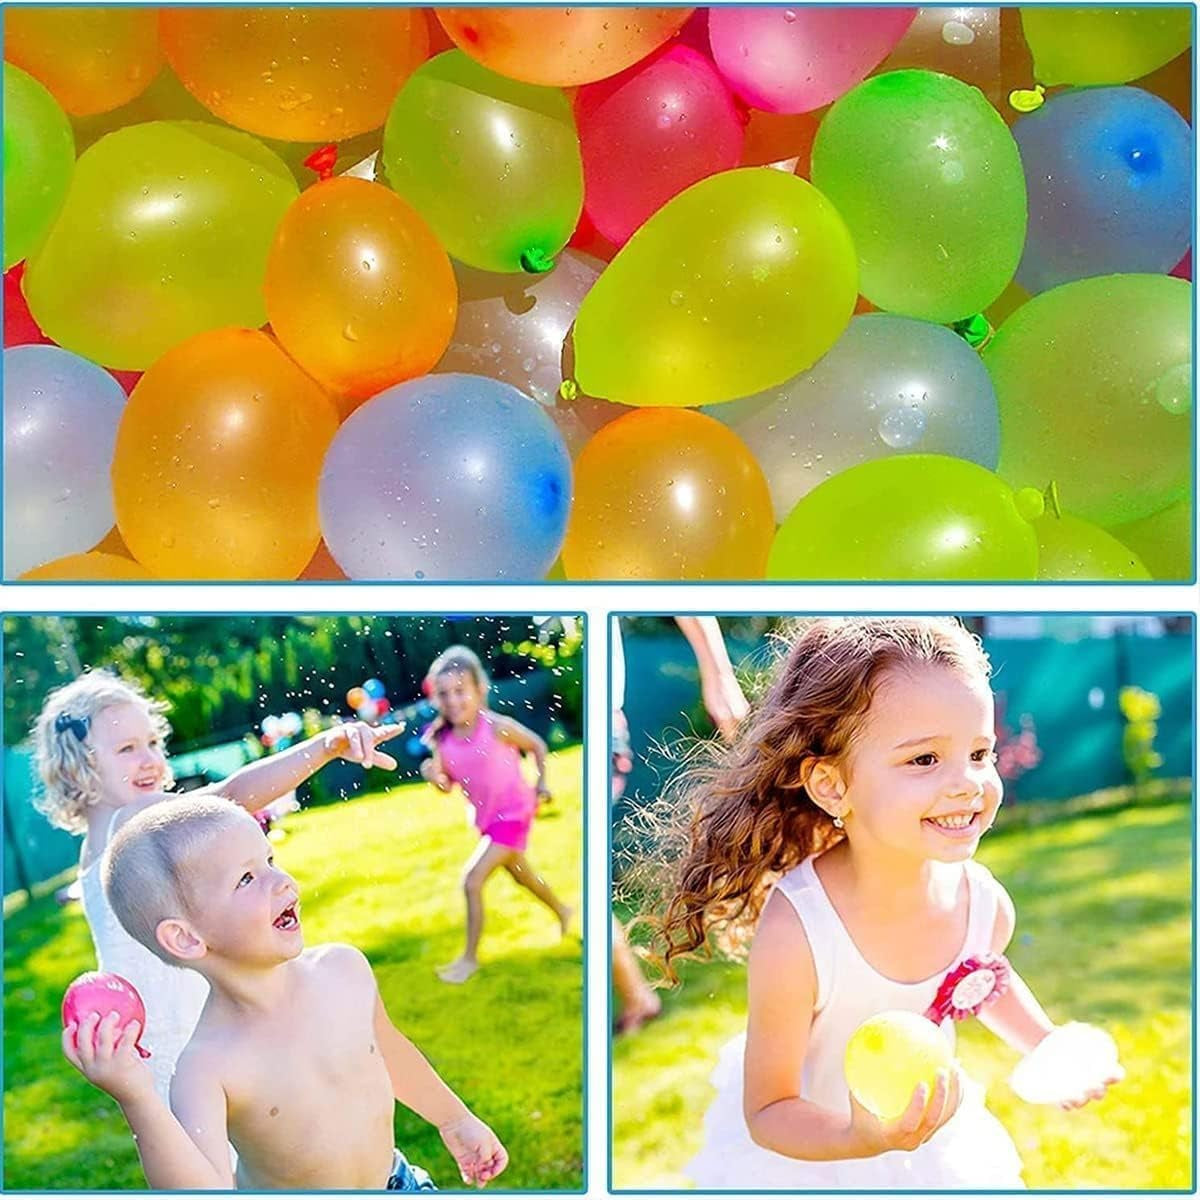 Water Balloons Quick Fill Self Sealing Instant Balloons Easy Balloons Splash for Kids Girls Boys Water Balloons Set Party Games 666 Balloons for Outdoor Summer Funs